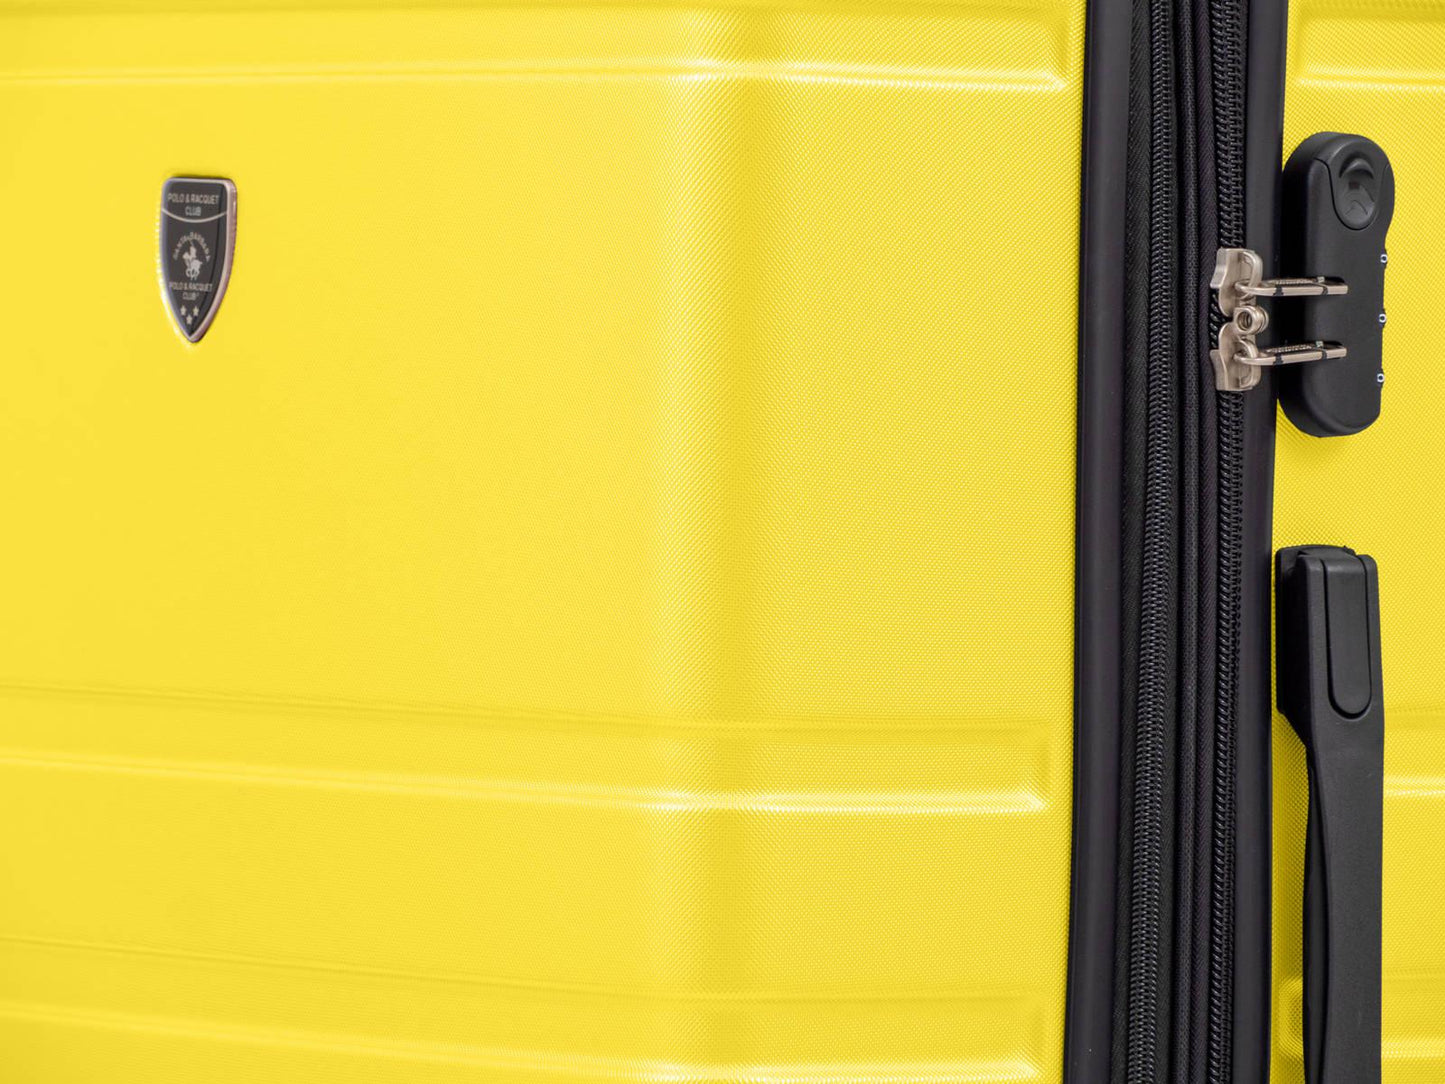 SANTA BARBARA POLO & RAQUET CLUB - מזוודה טרולי עלייה למטוס 20" דגם 1807 בצבע צהוב - MASHBIR//365